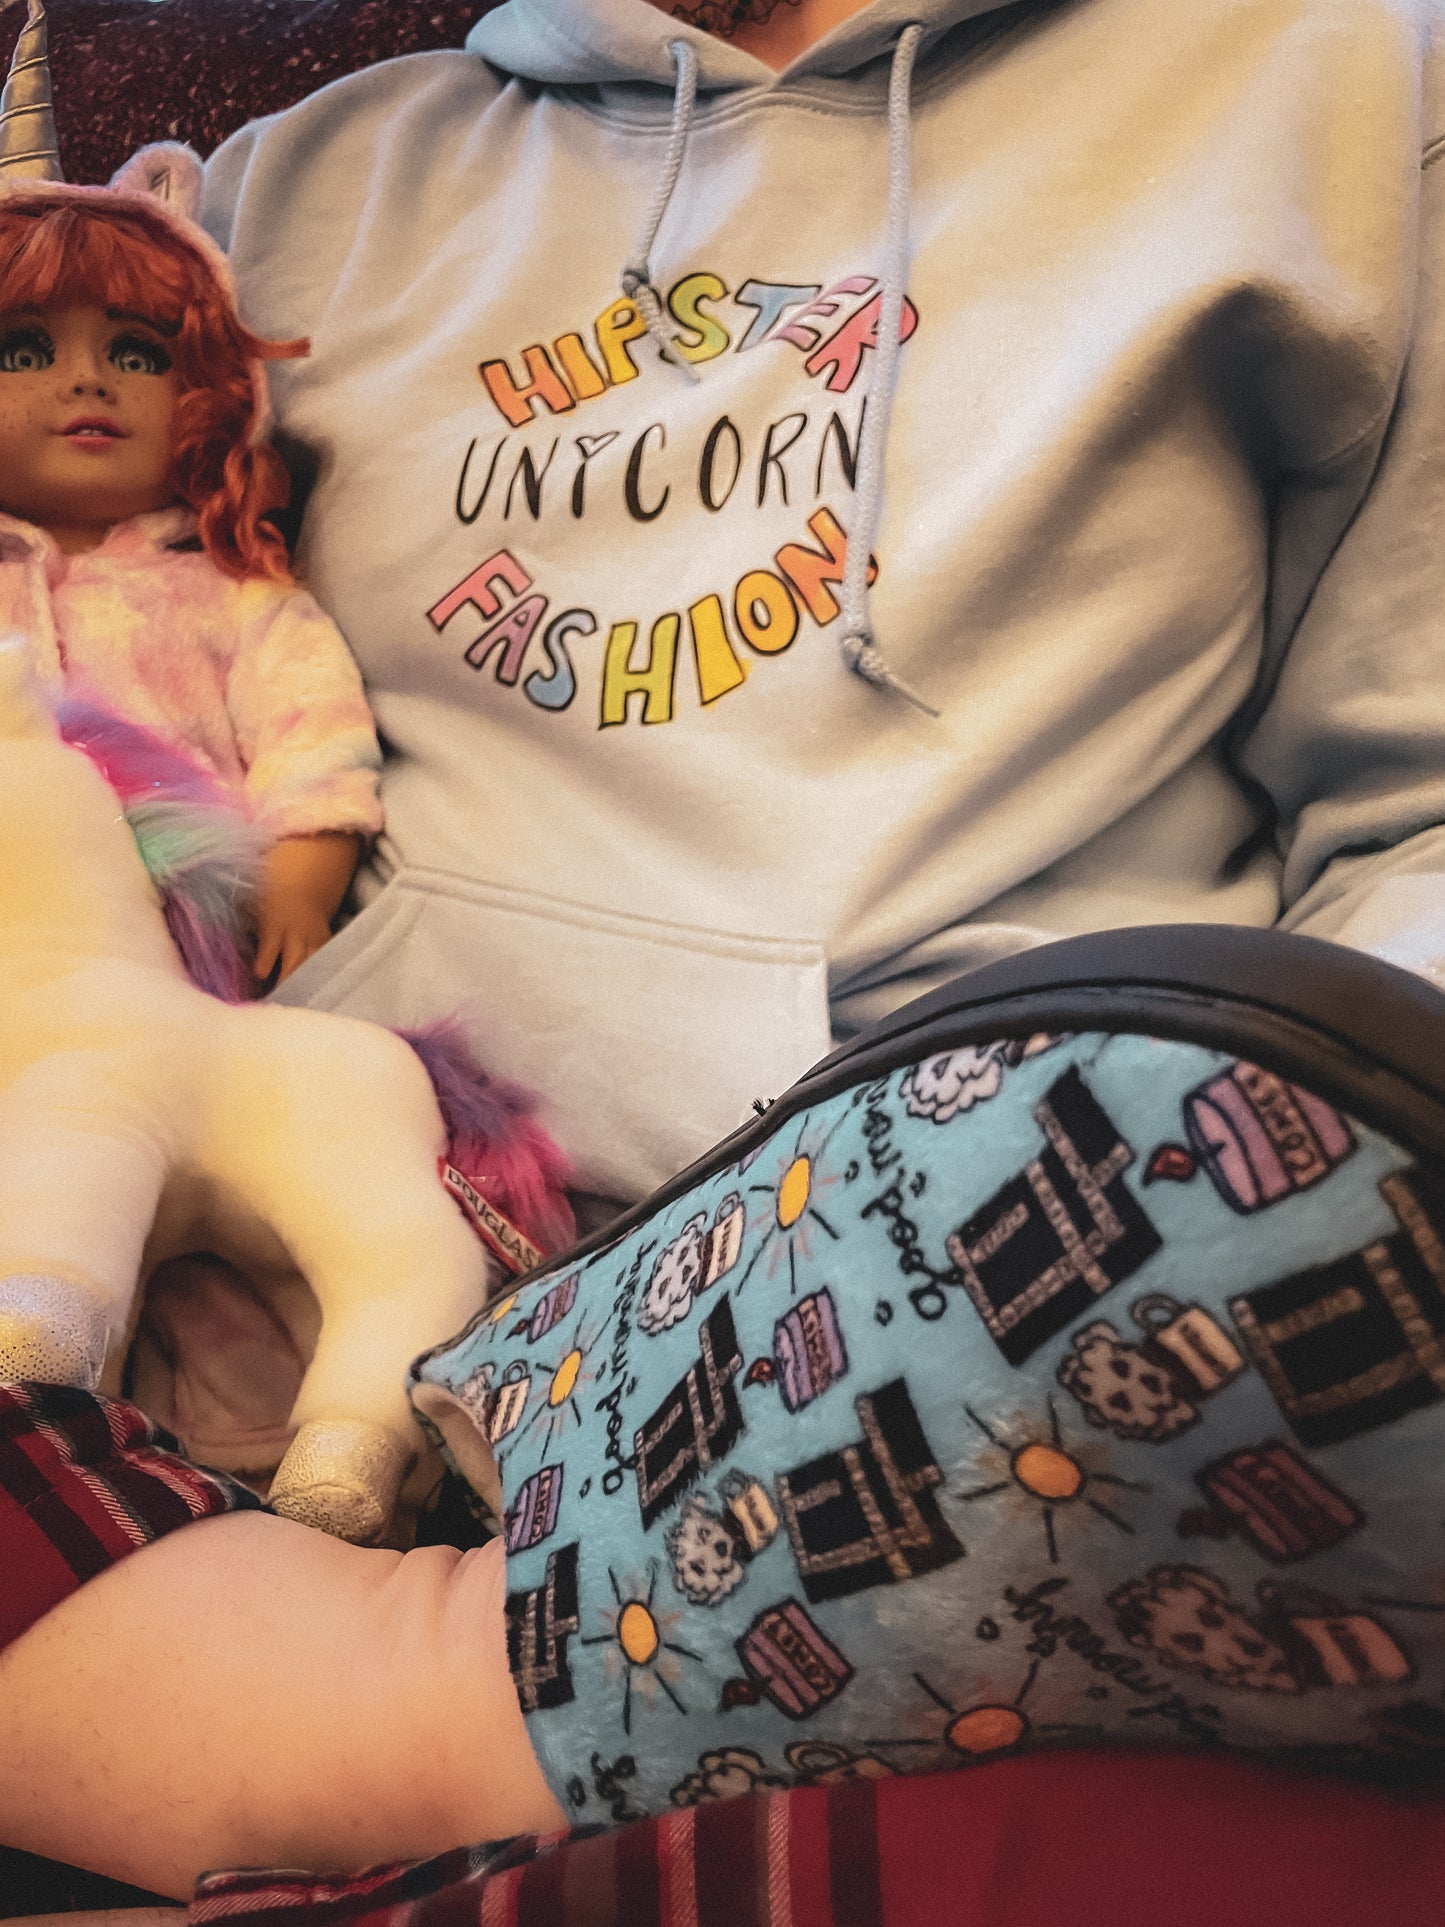 Hipster Unicorn FASHION Sweatshirt